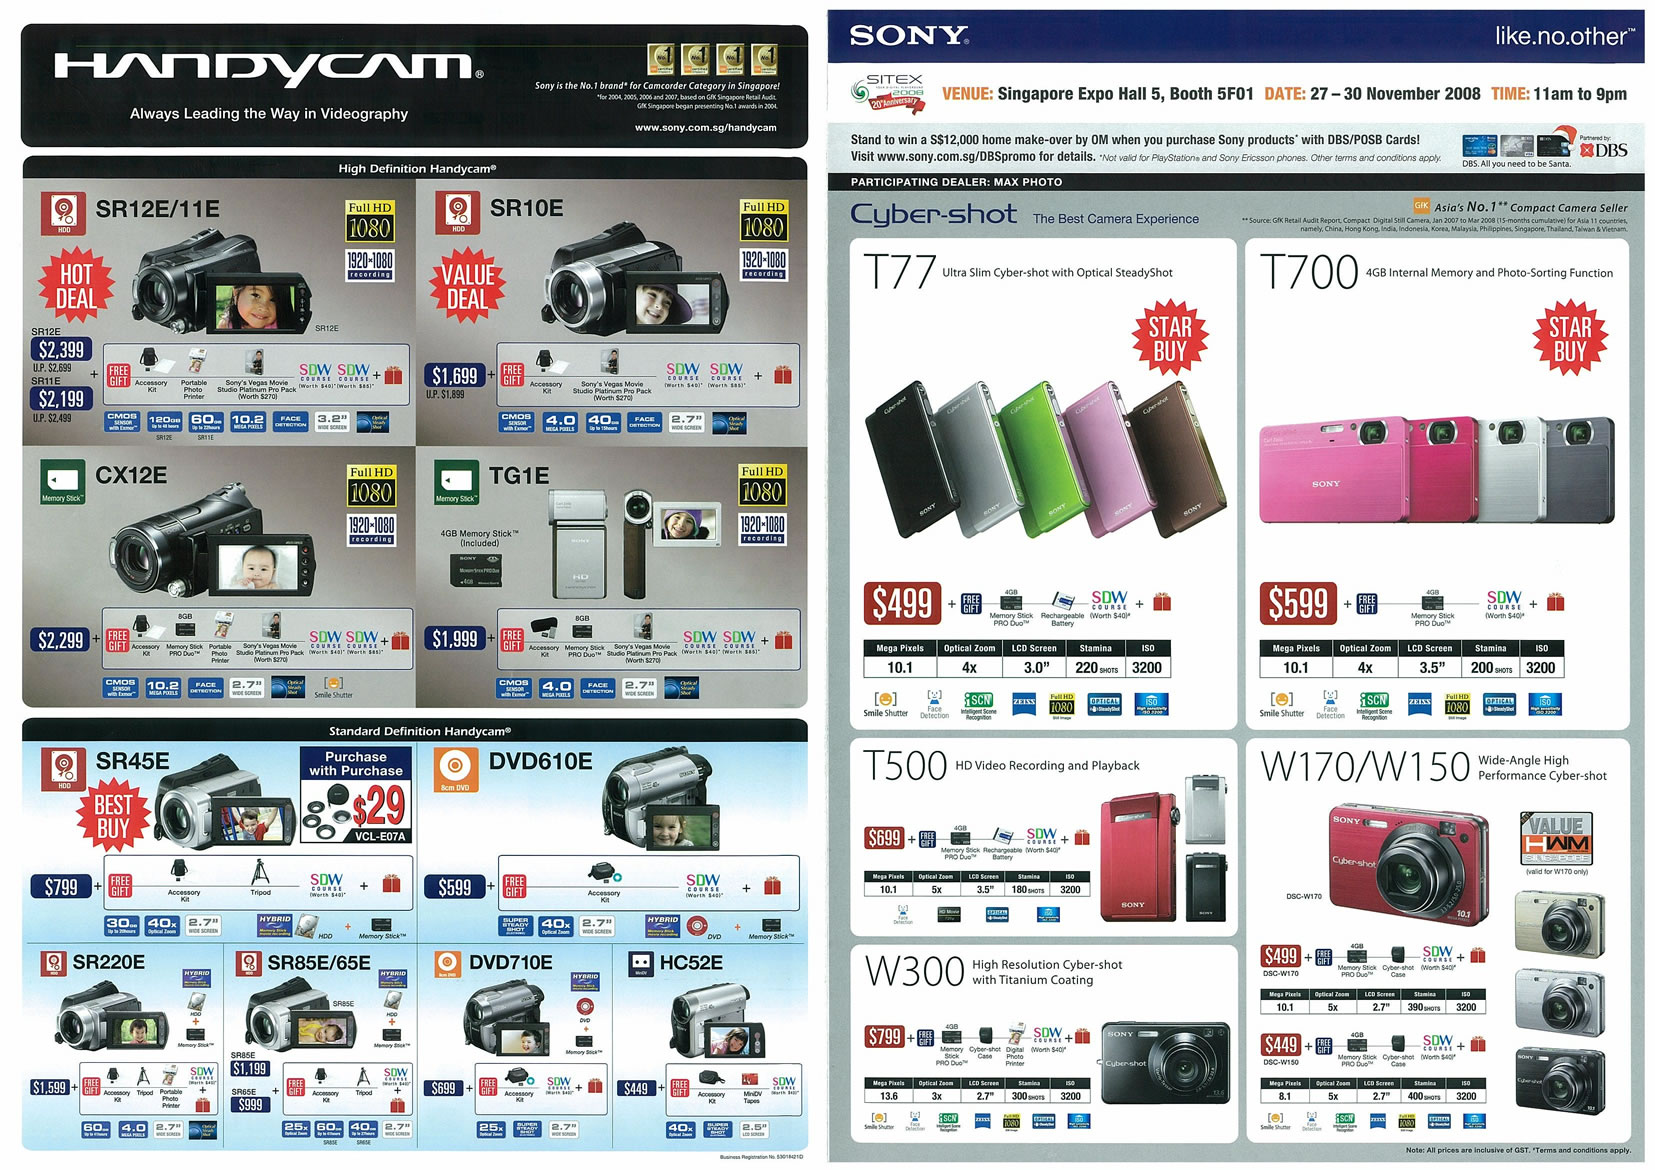 Sitex 2008 price list image brochure of Sony Handycam Cybershot Alpha Page 1 - Vr-zone Tclong